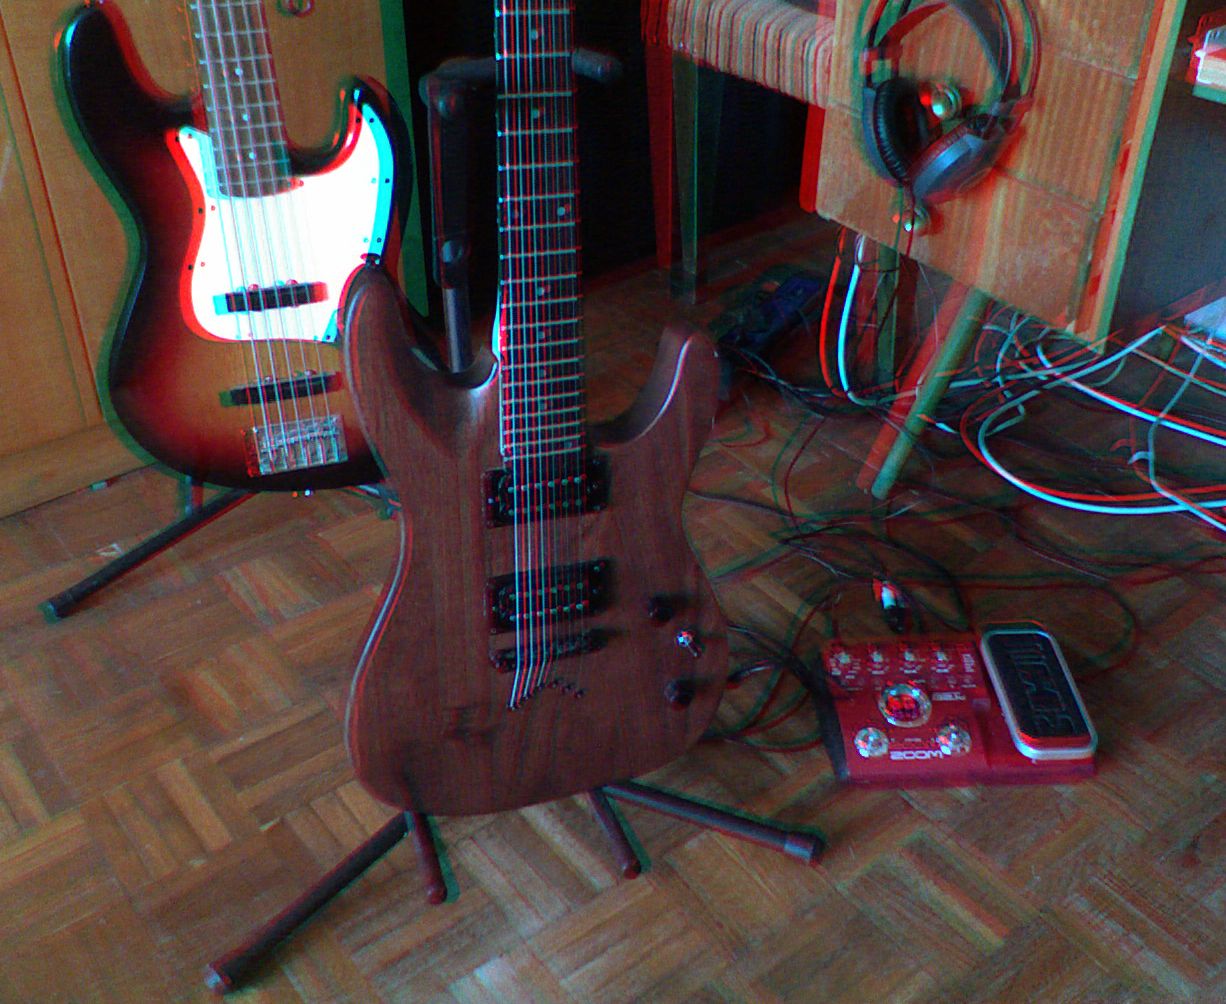 guitars-in-the-room.jpg